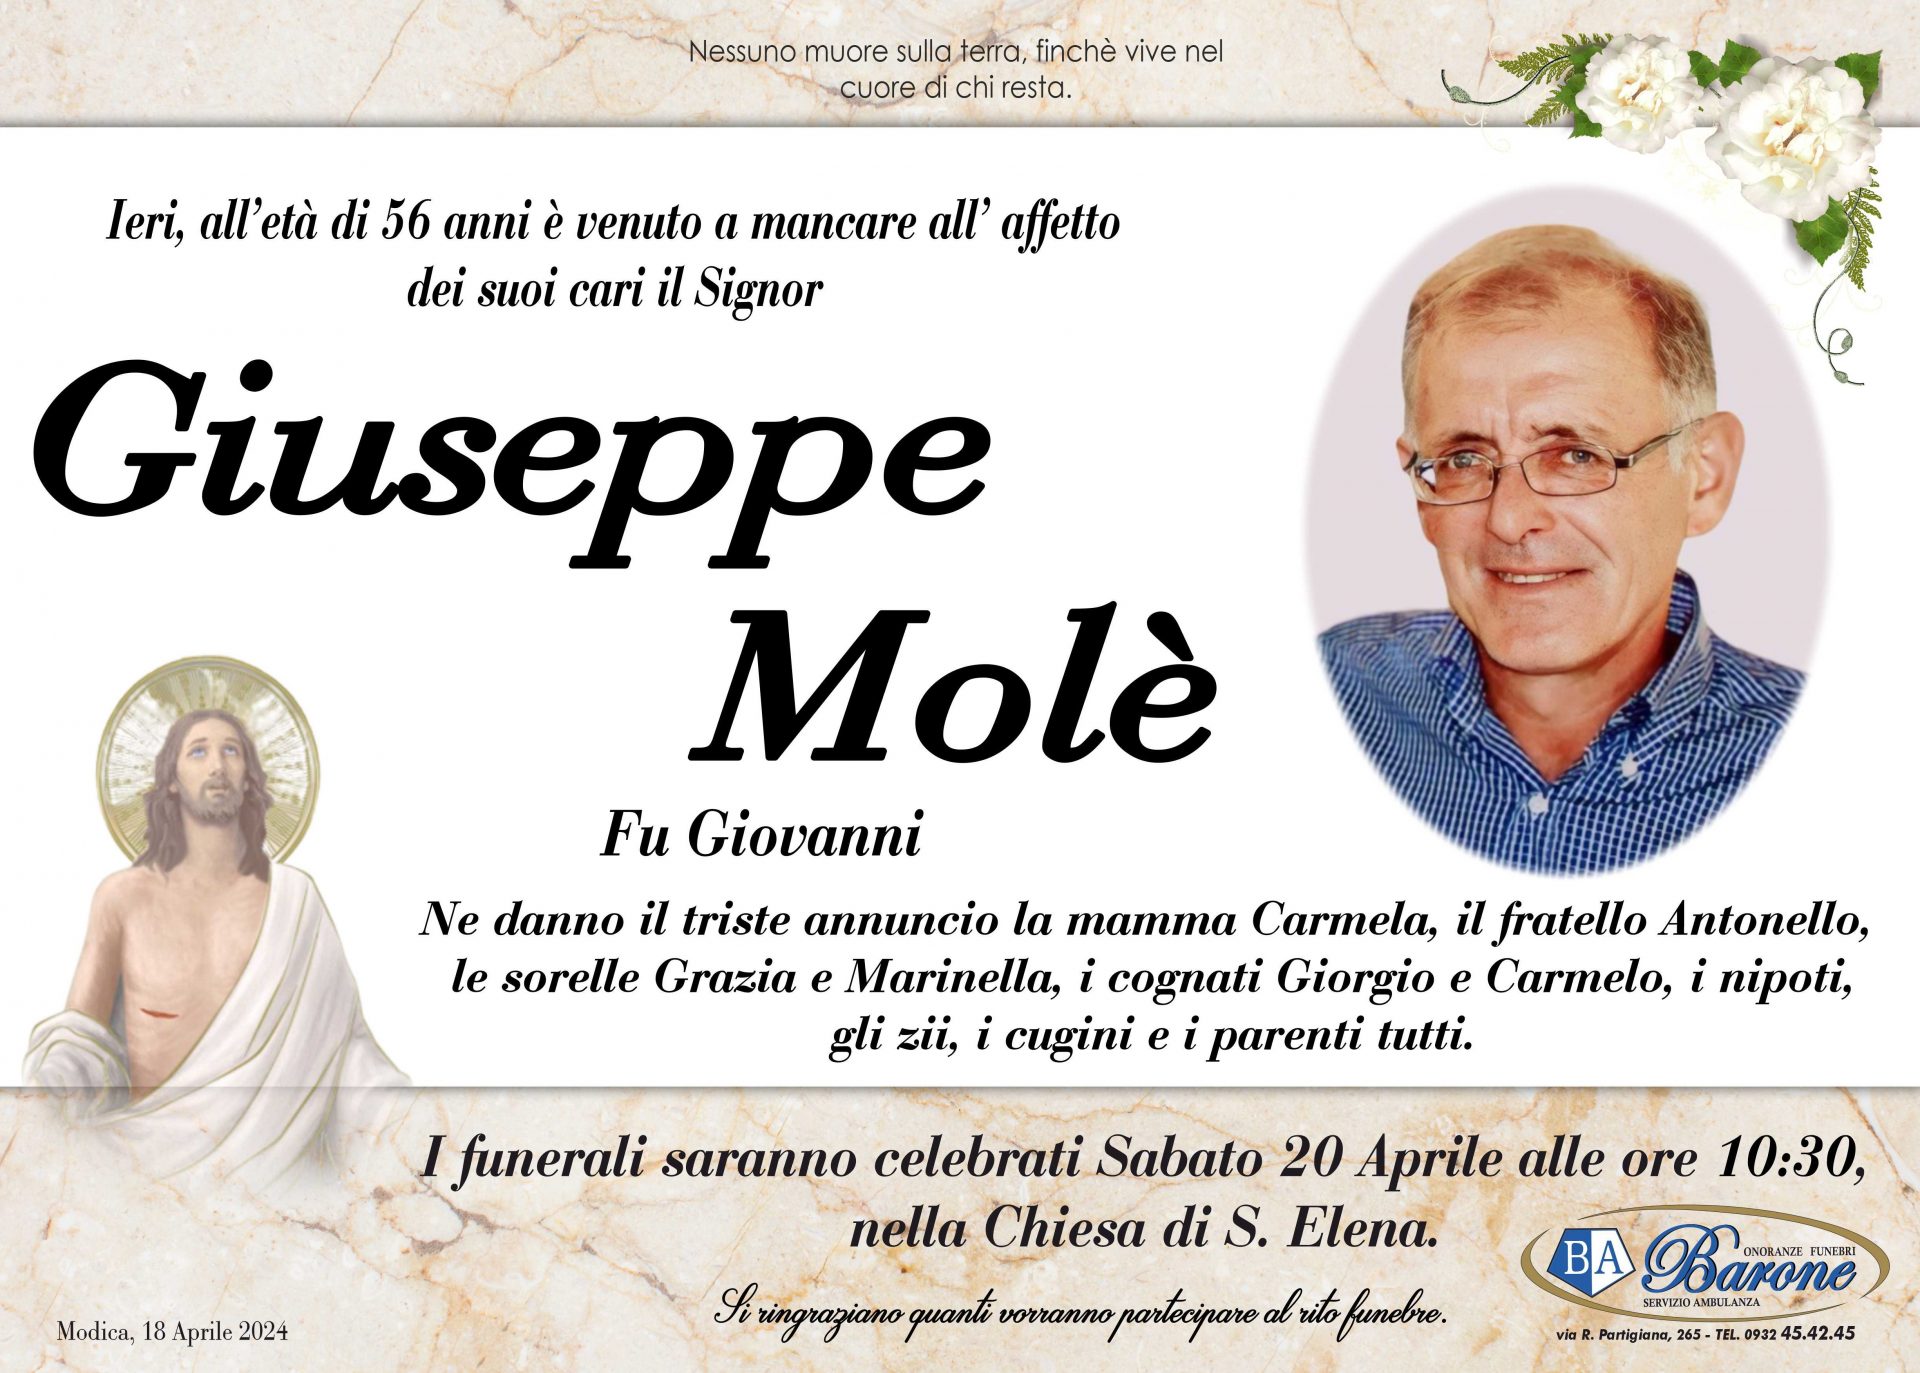 Giuseppe Molè